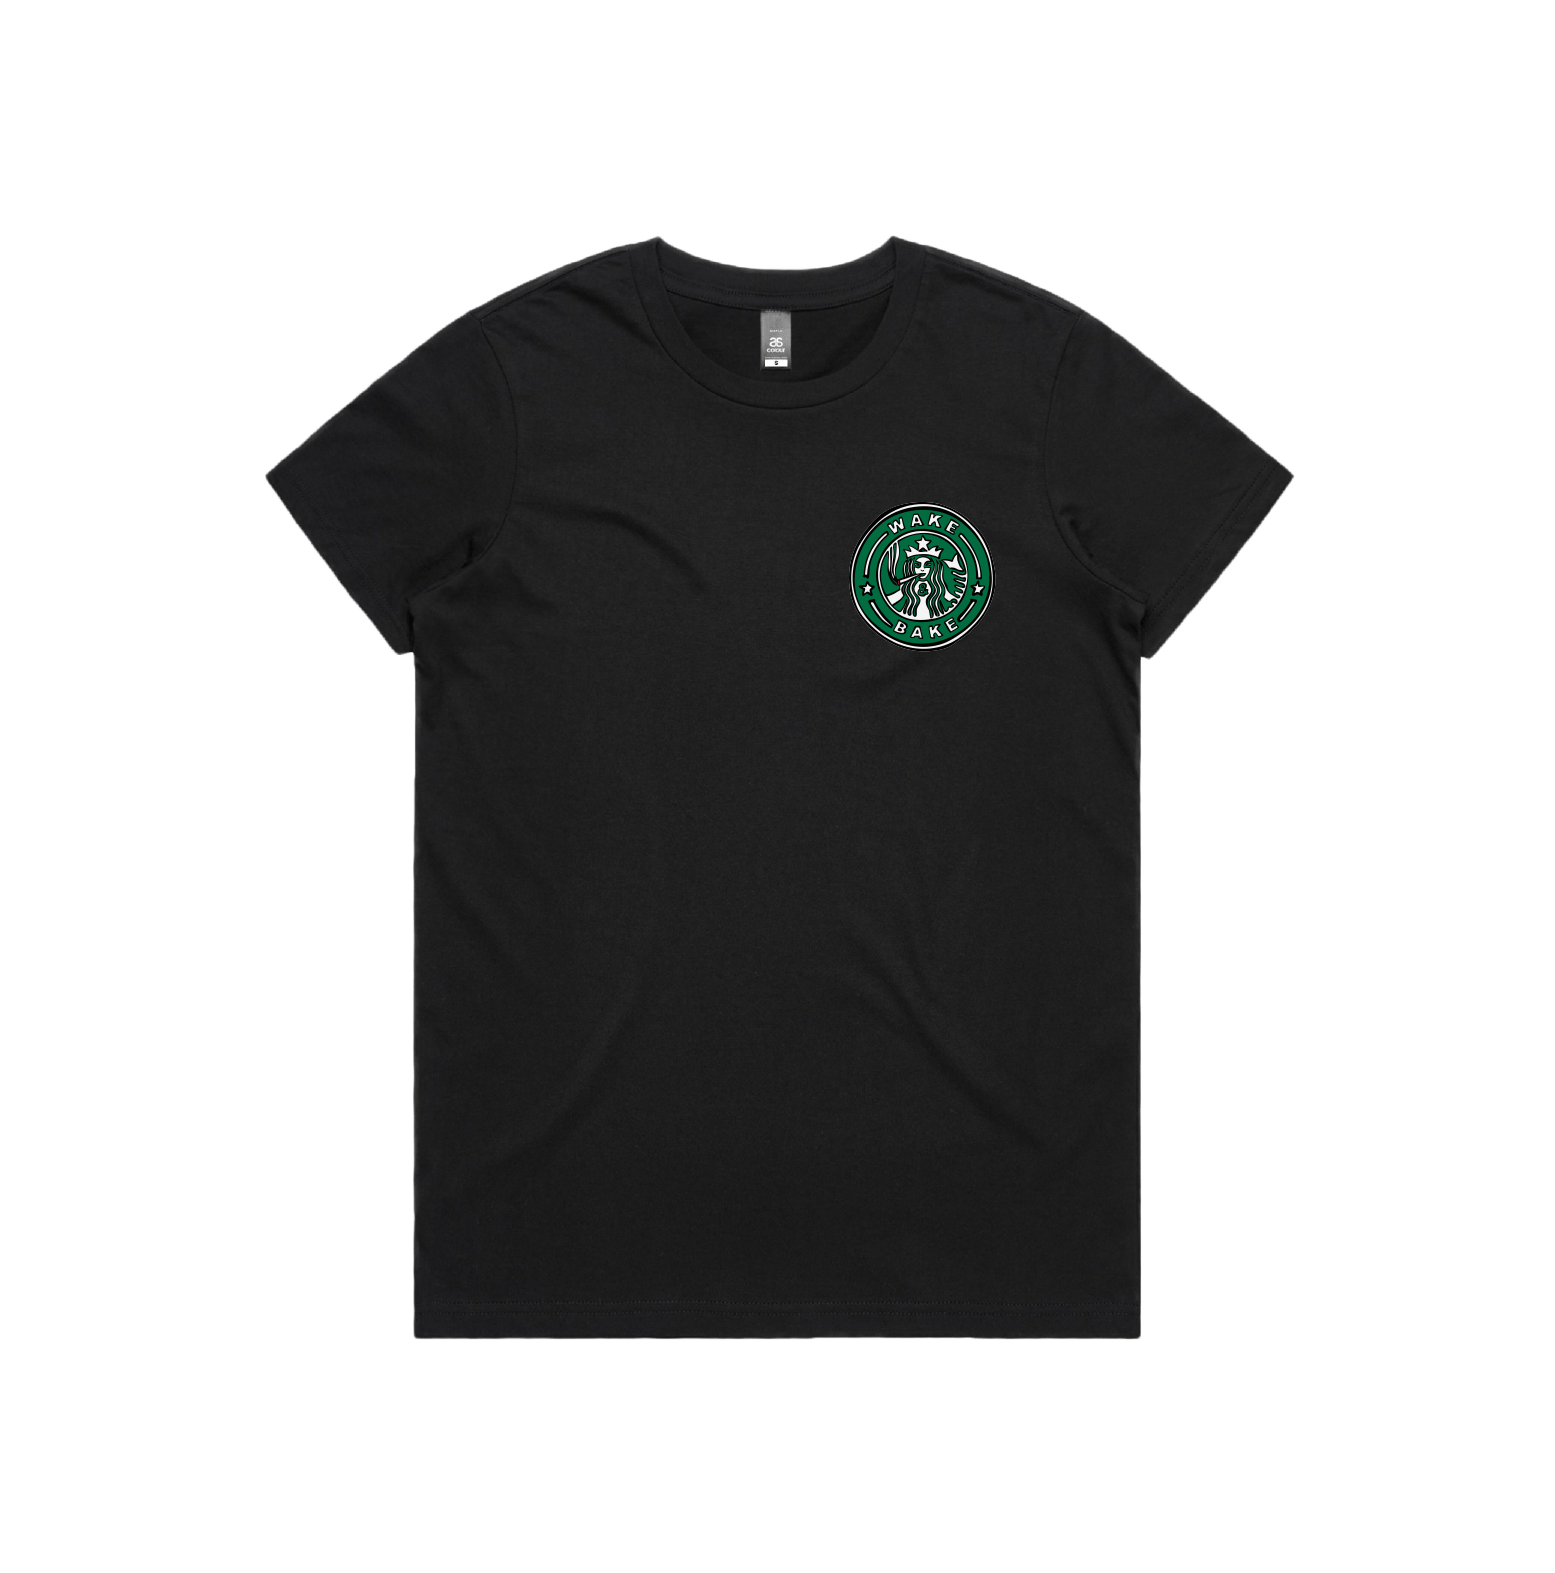 XS / Black / Small Front Design Wake & Bake 🚬 - Women's T Shirt